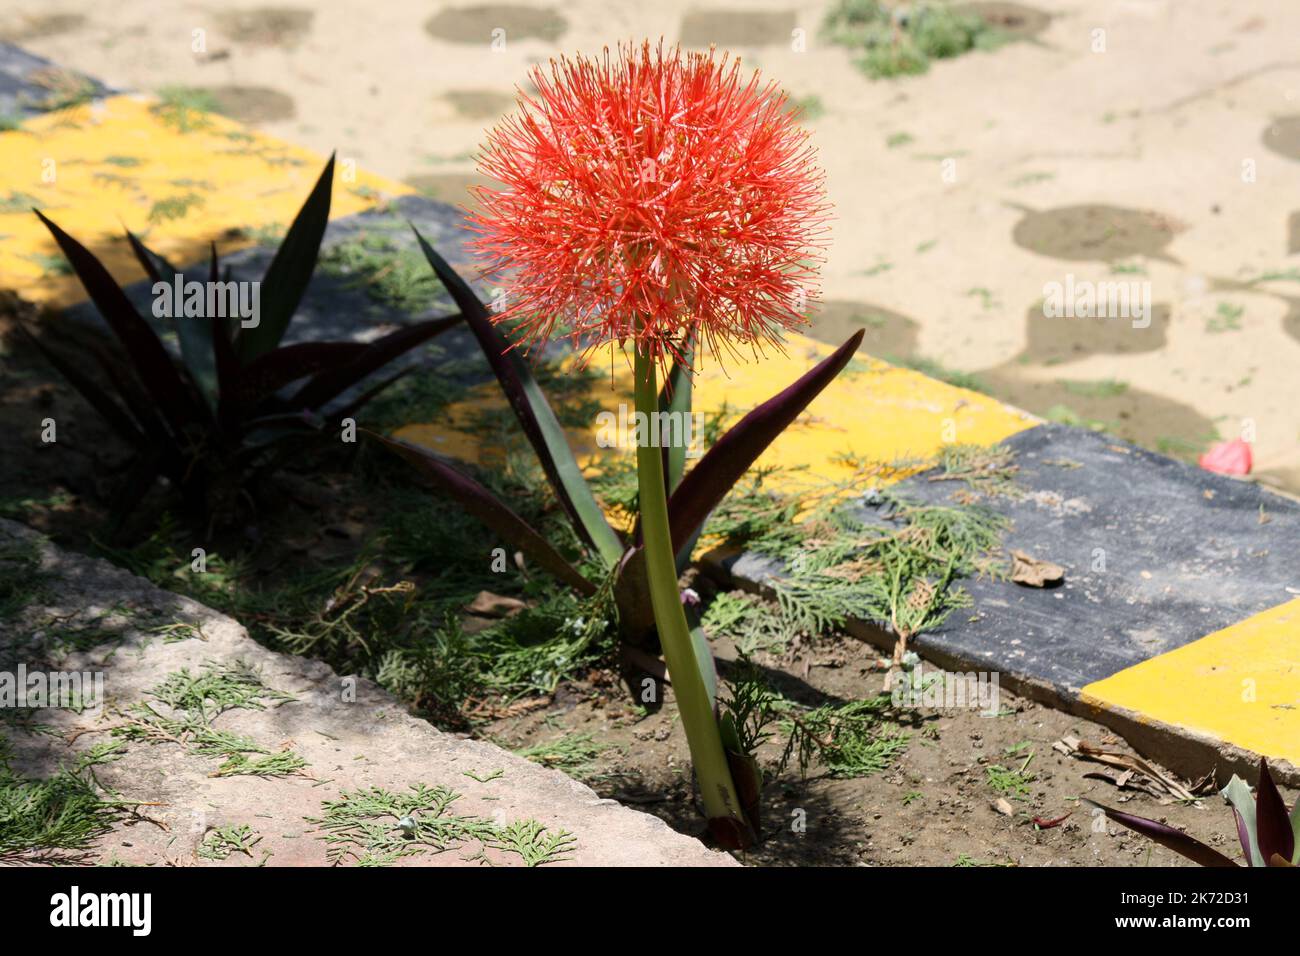 Feuerball-Lilie (Scadoxus multiflorus) in Blüte im Garten : (pix SShukla) Stockfoto